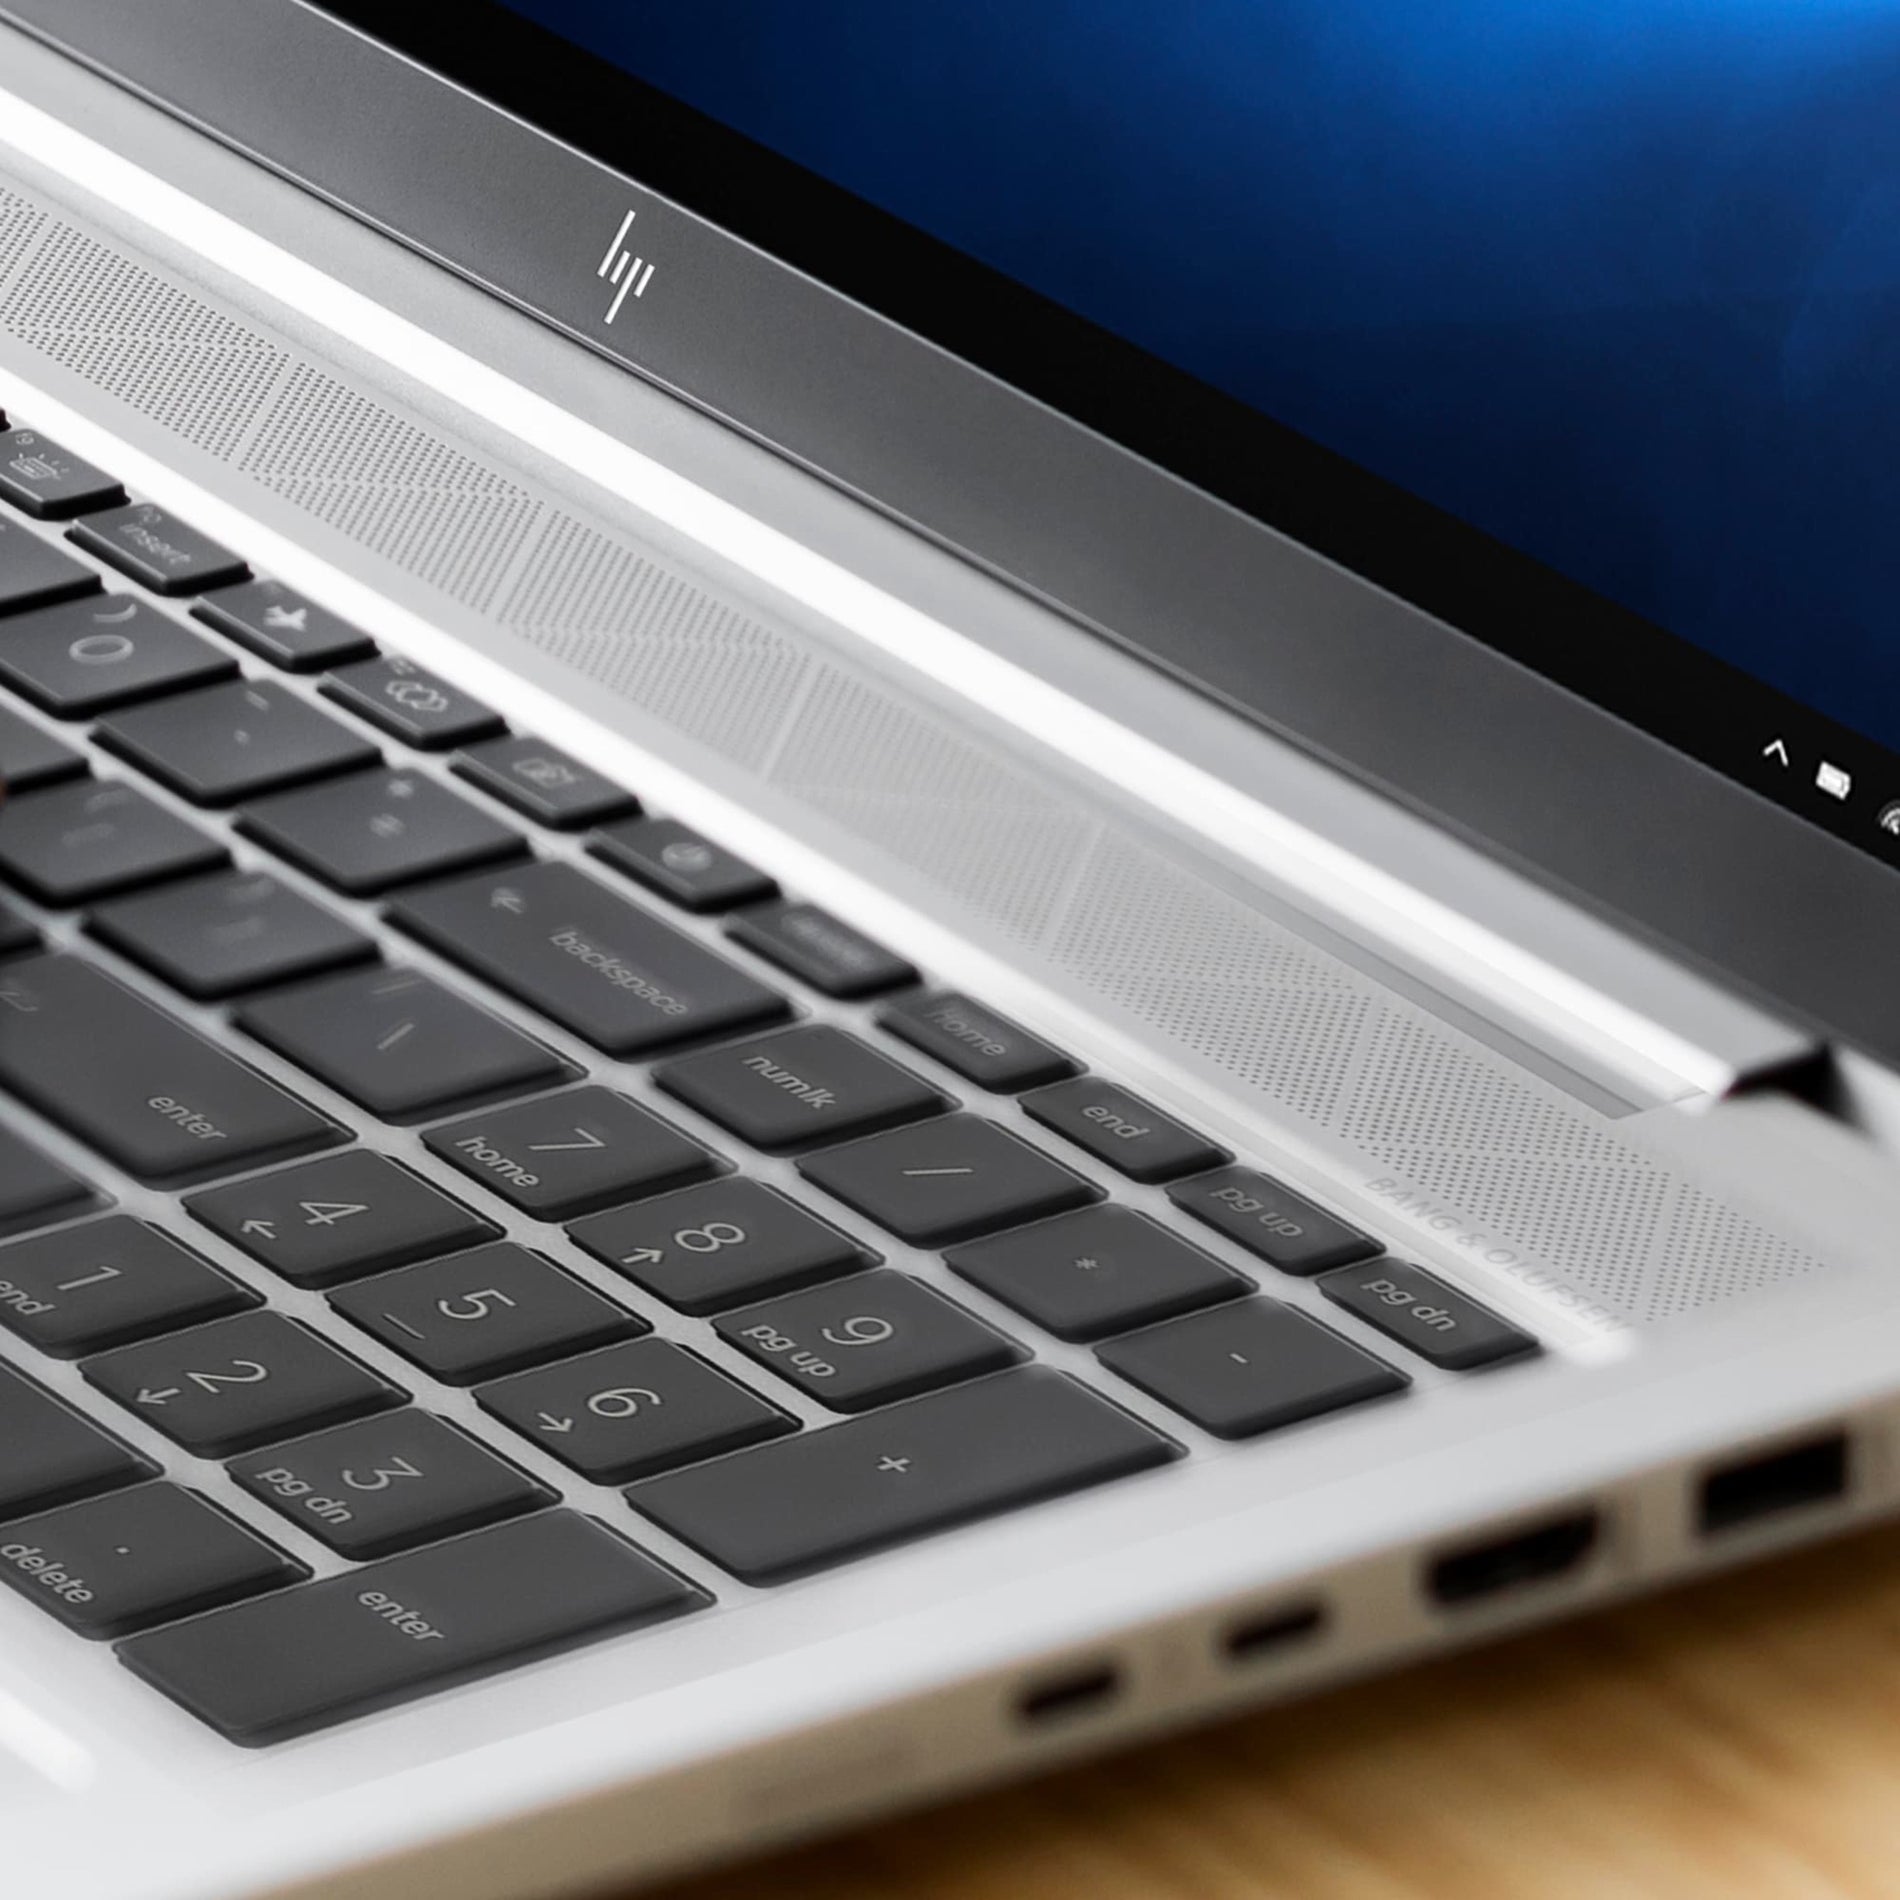 HPI SOURCING - NEW EliteBook 850 G8 Notebook PC, 15.6" Full HD, Intel Core i7, 16GB RAM, 256GB SSD